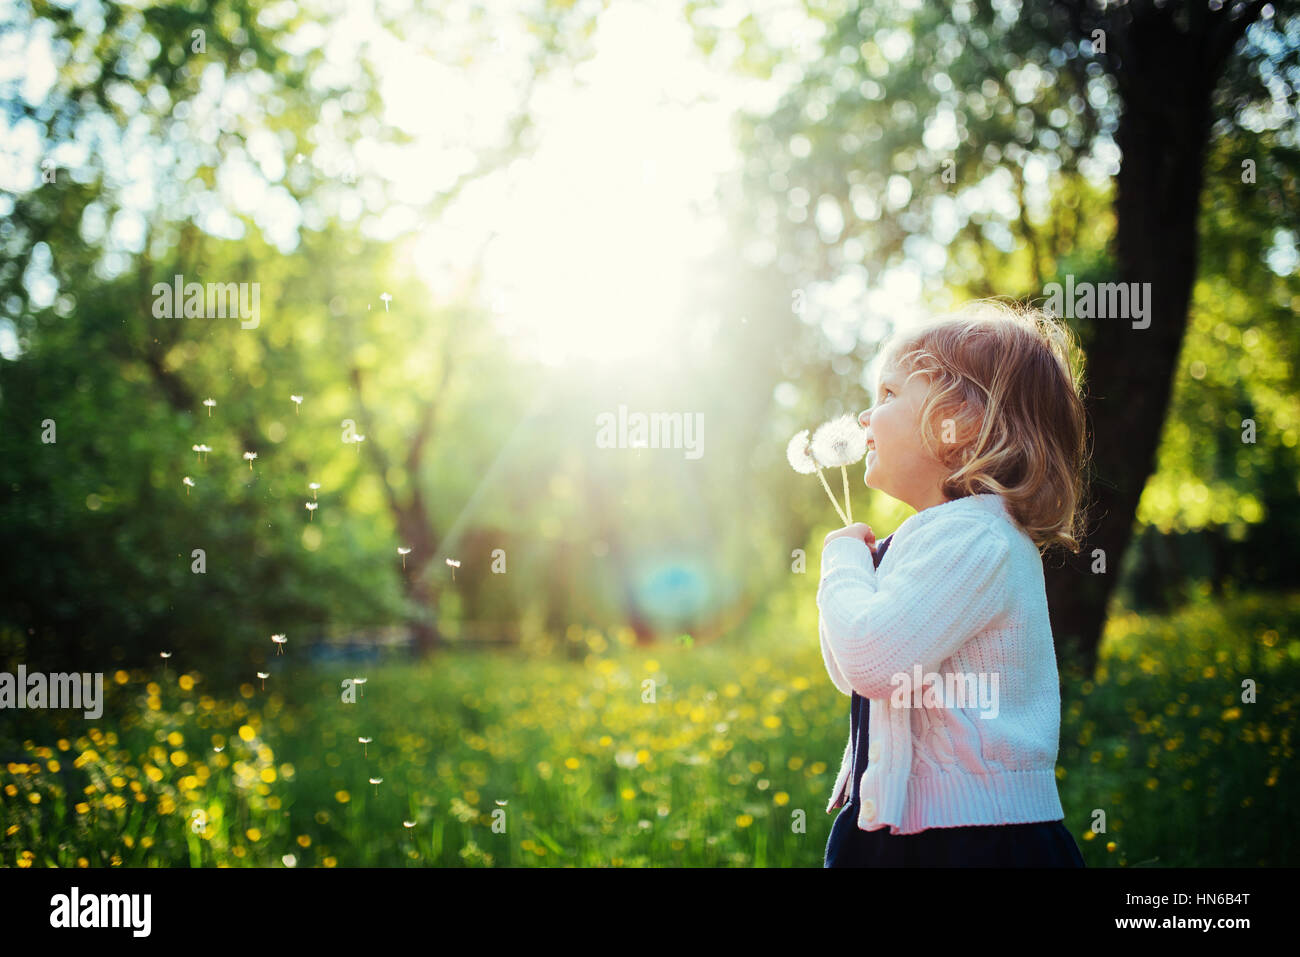 child with dandelion Stock Photo